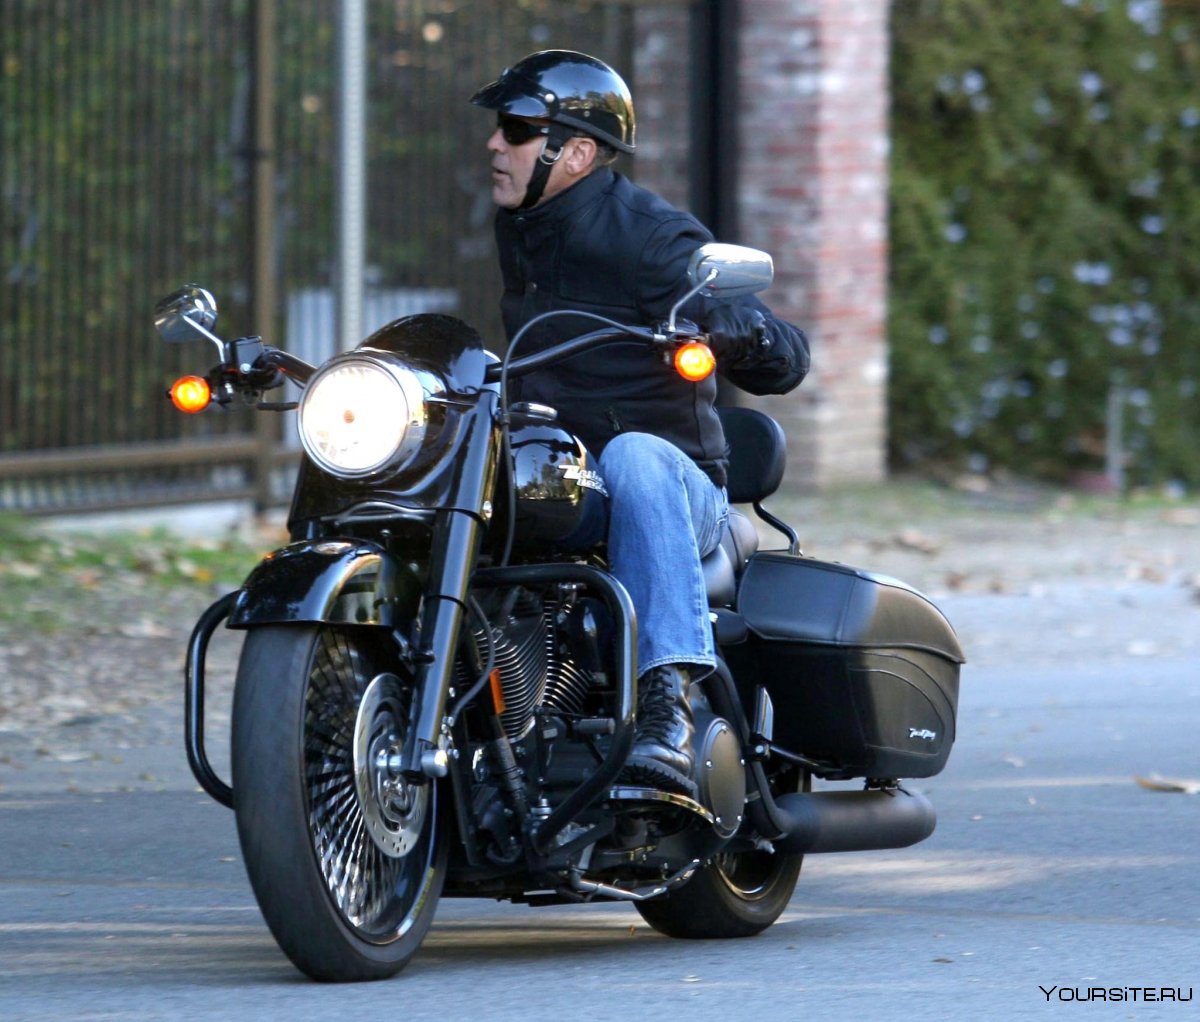 Brad Pitt Motorcycle